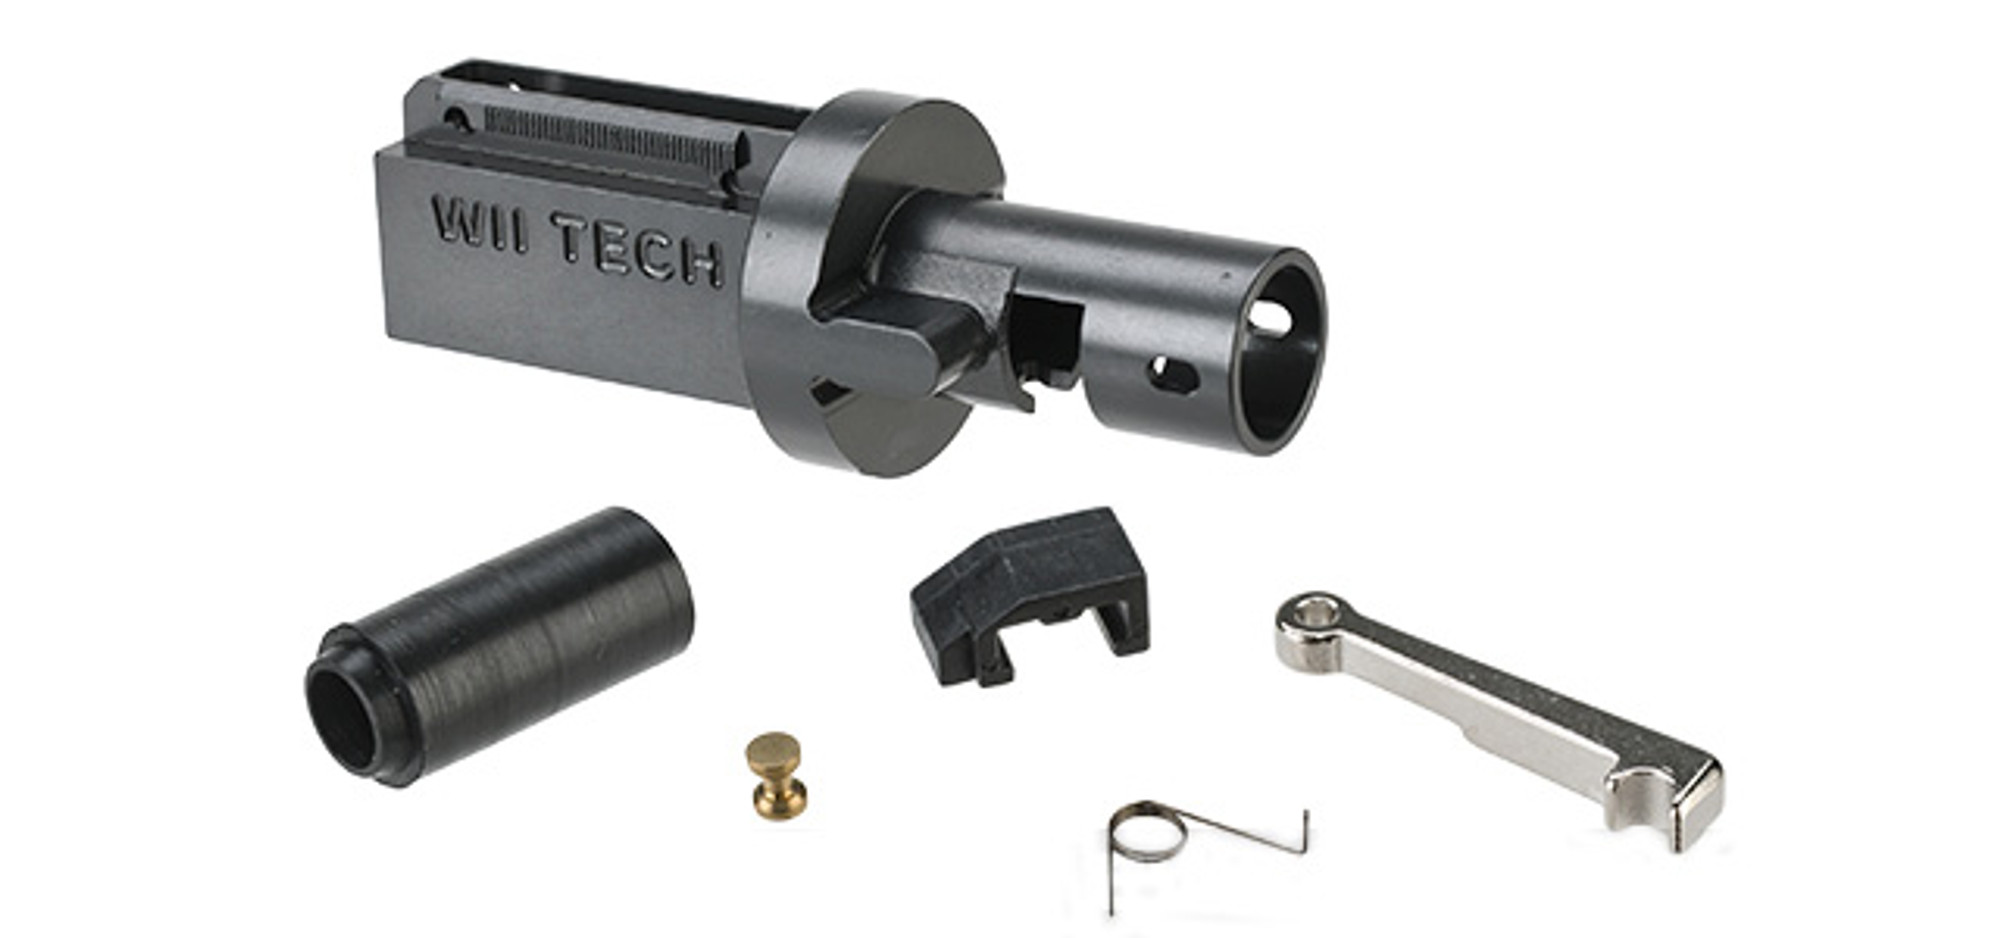 Wii Tech CNC Aluminum Hopup Set for A&K  G&P ACR Series Airsoft AEG Rifles